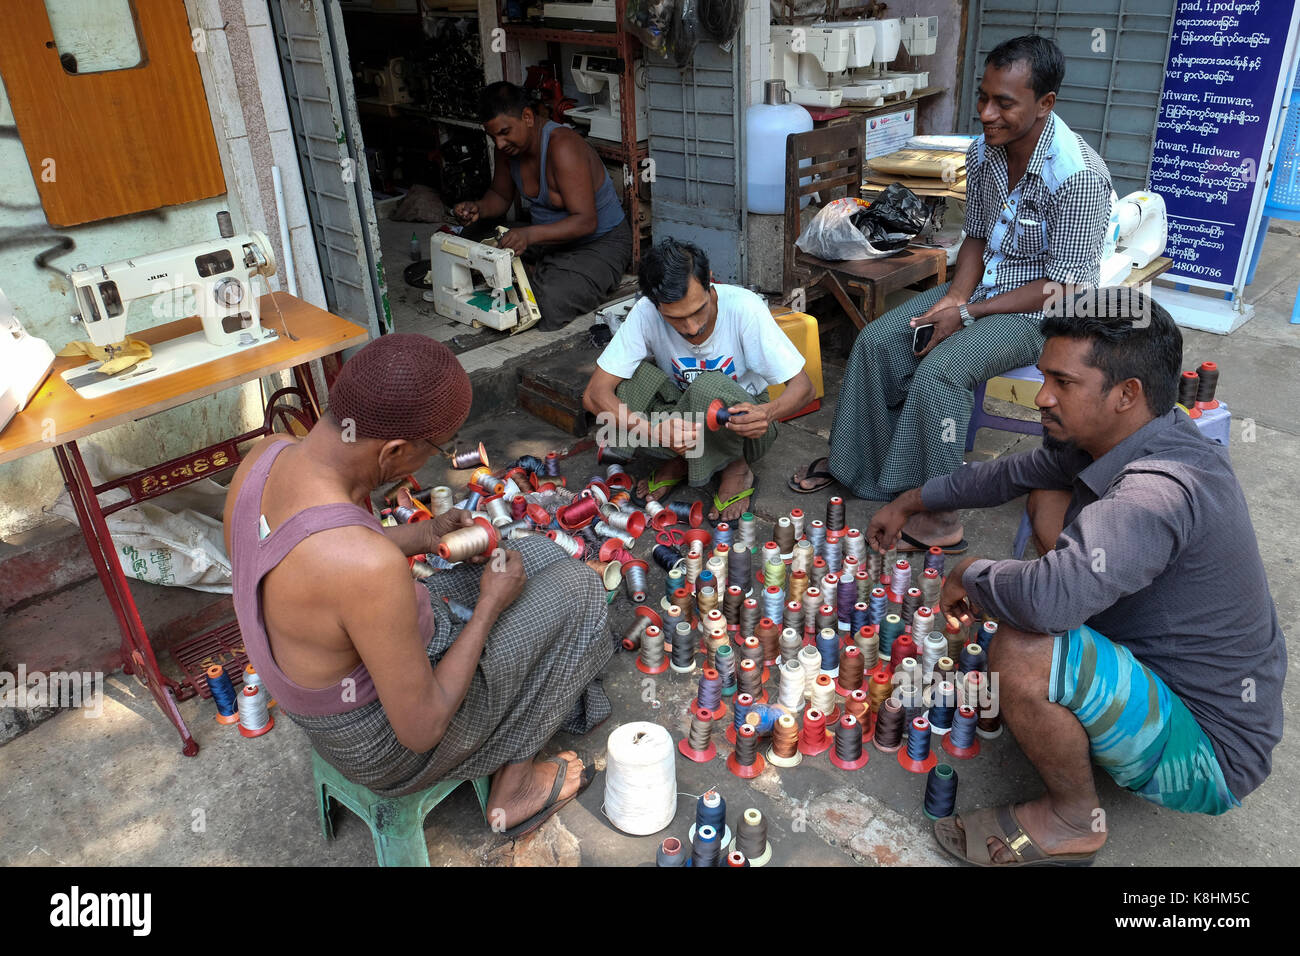 Burma, Myanmar: sewing workshop in a street of Rangoon. Men close to reels of thread Stock Photo